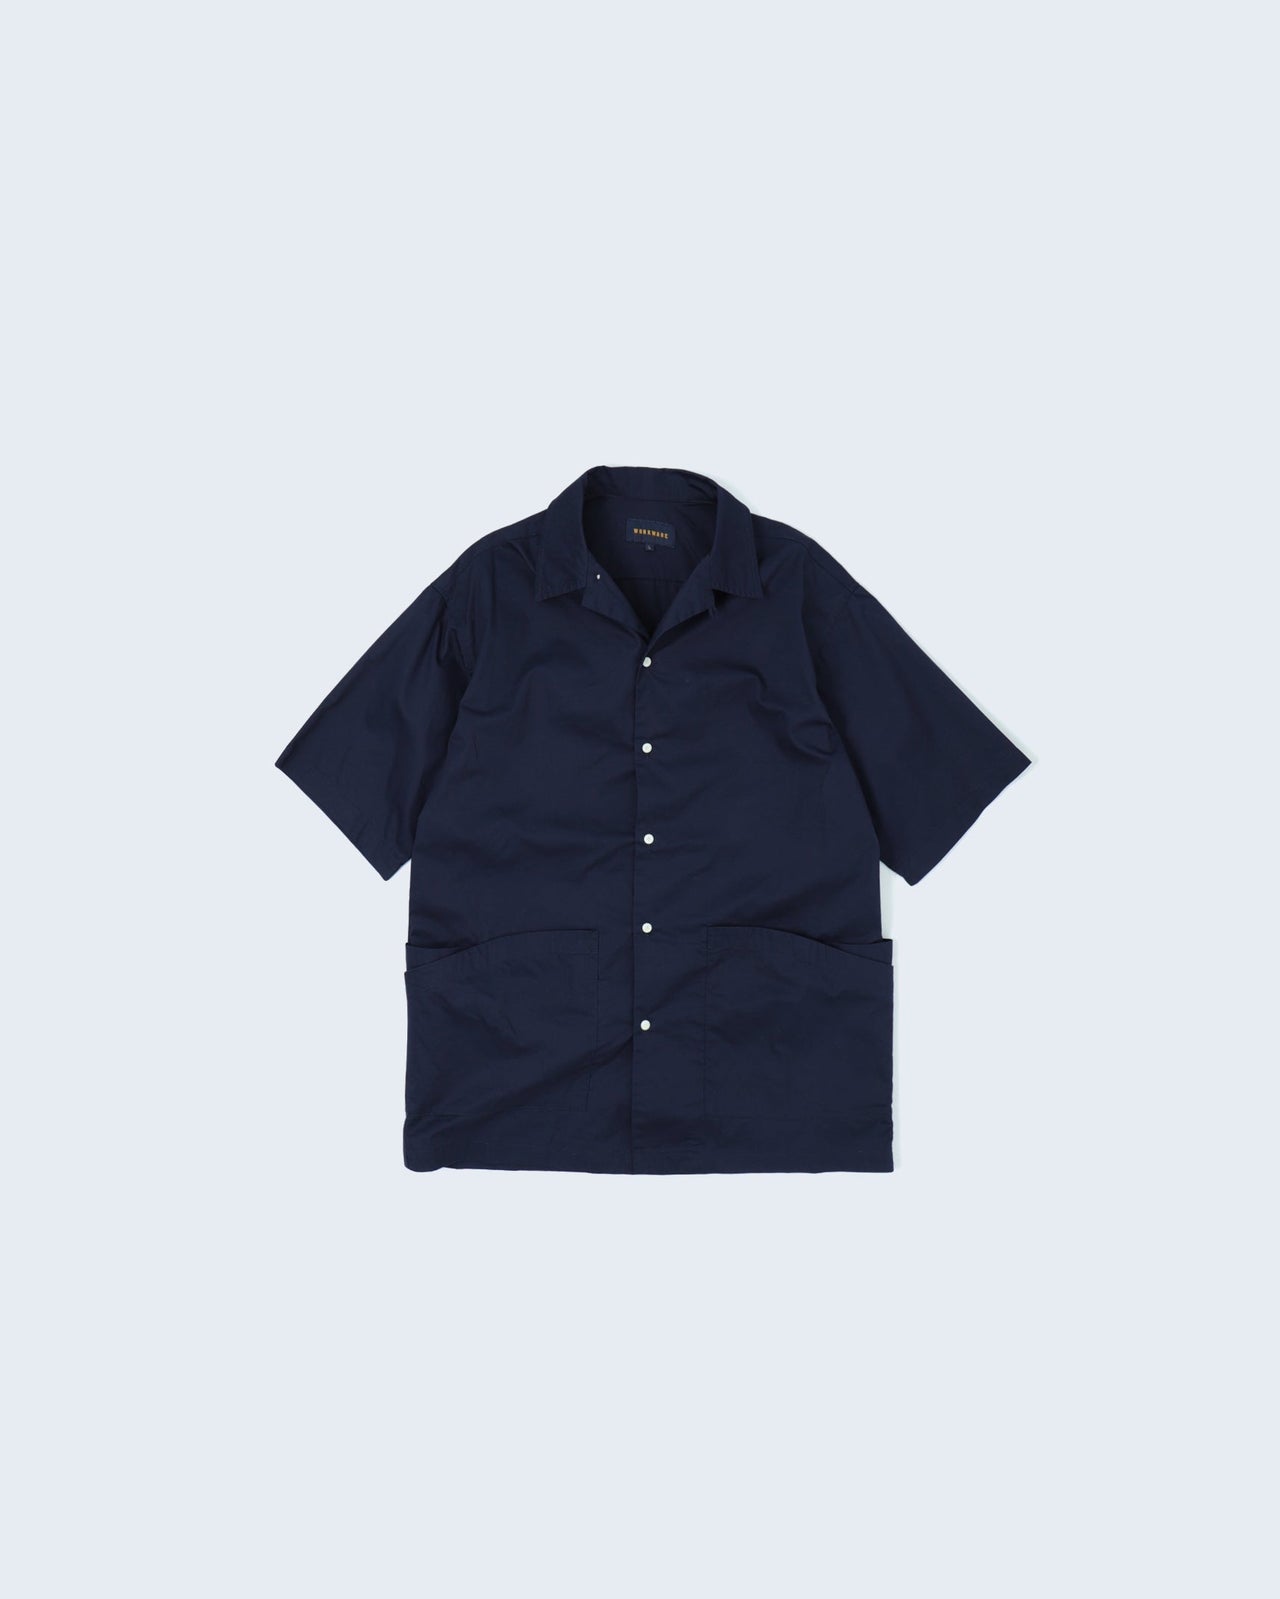 Workware - CP Shirt - Navy